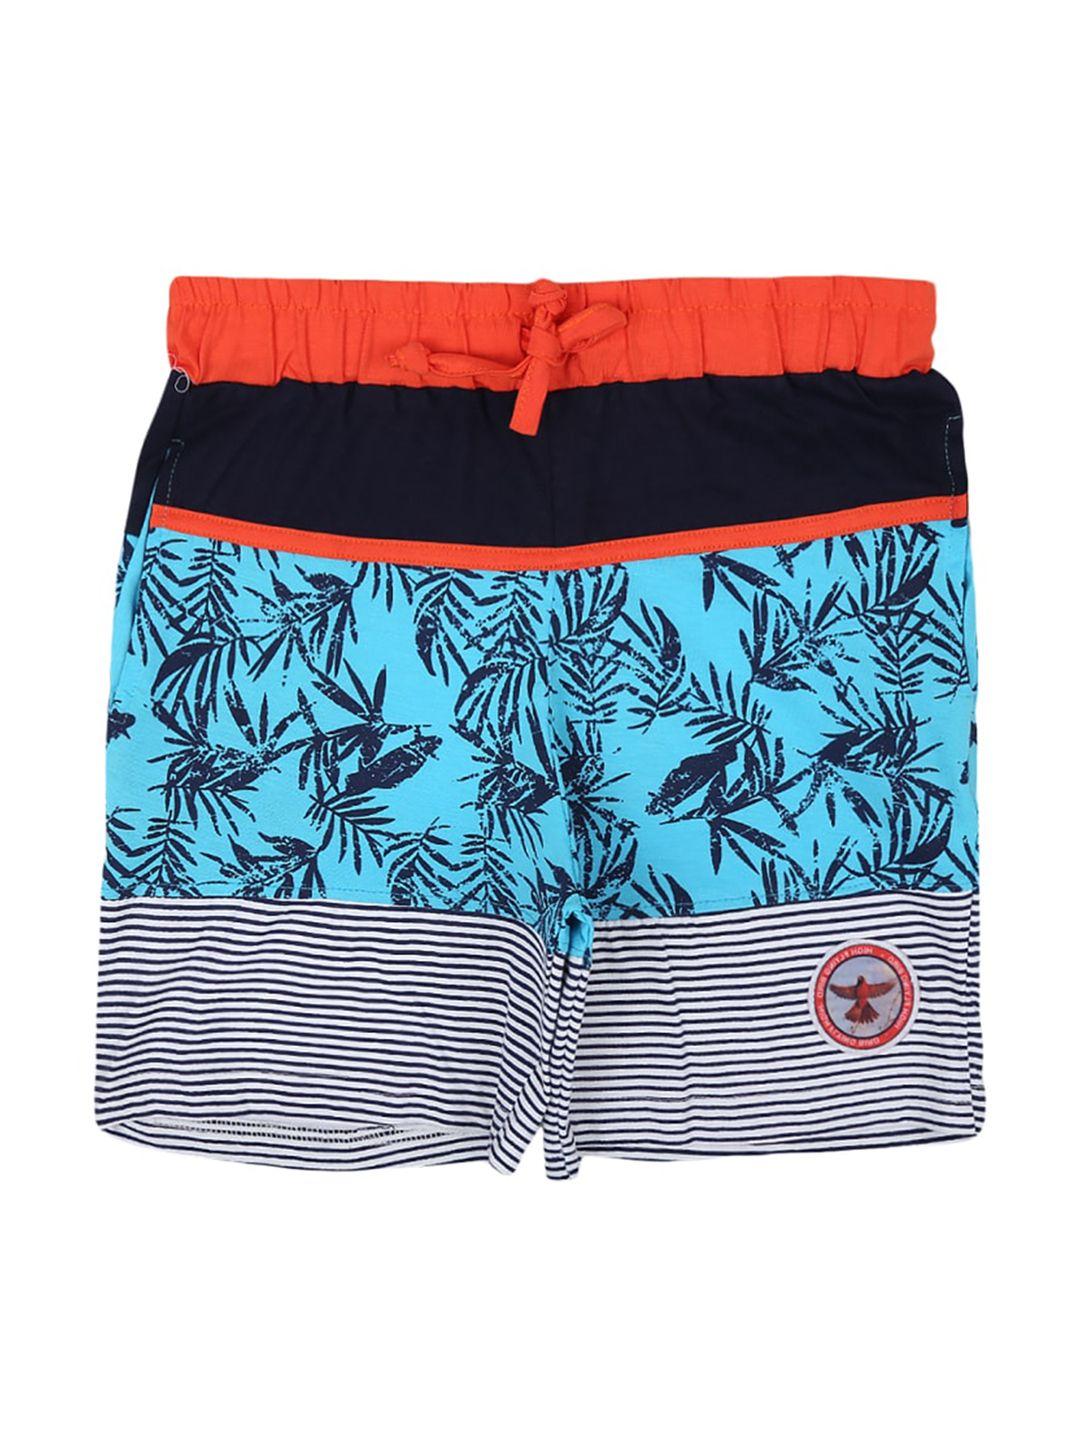 v-mart-boys-tropical-printed-mid-rise-cotton-shorts